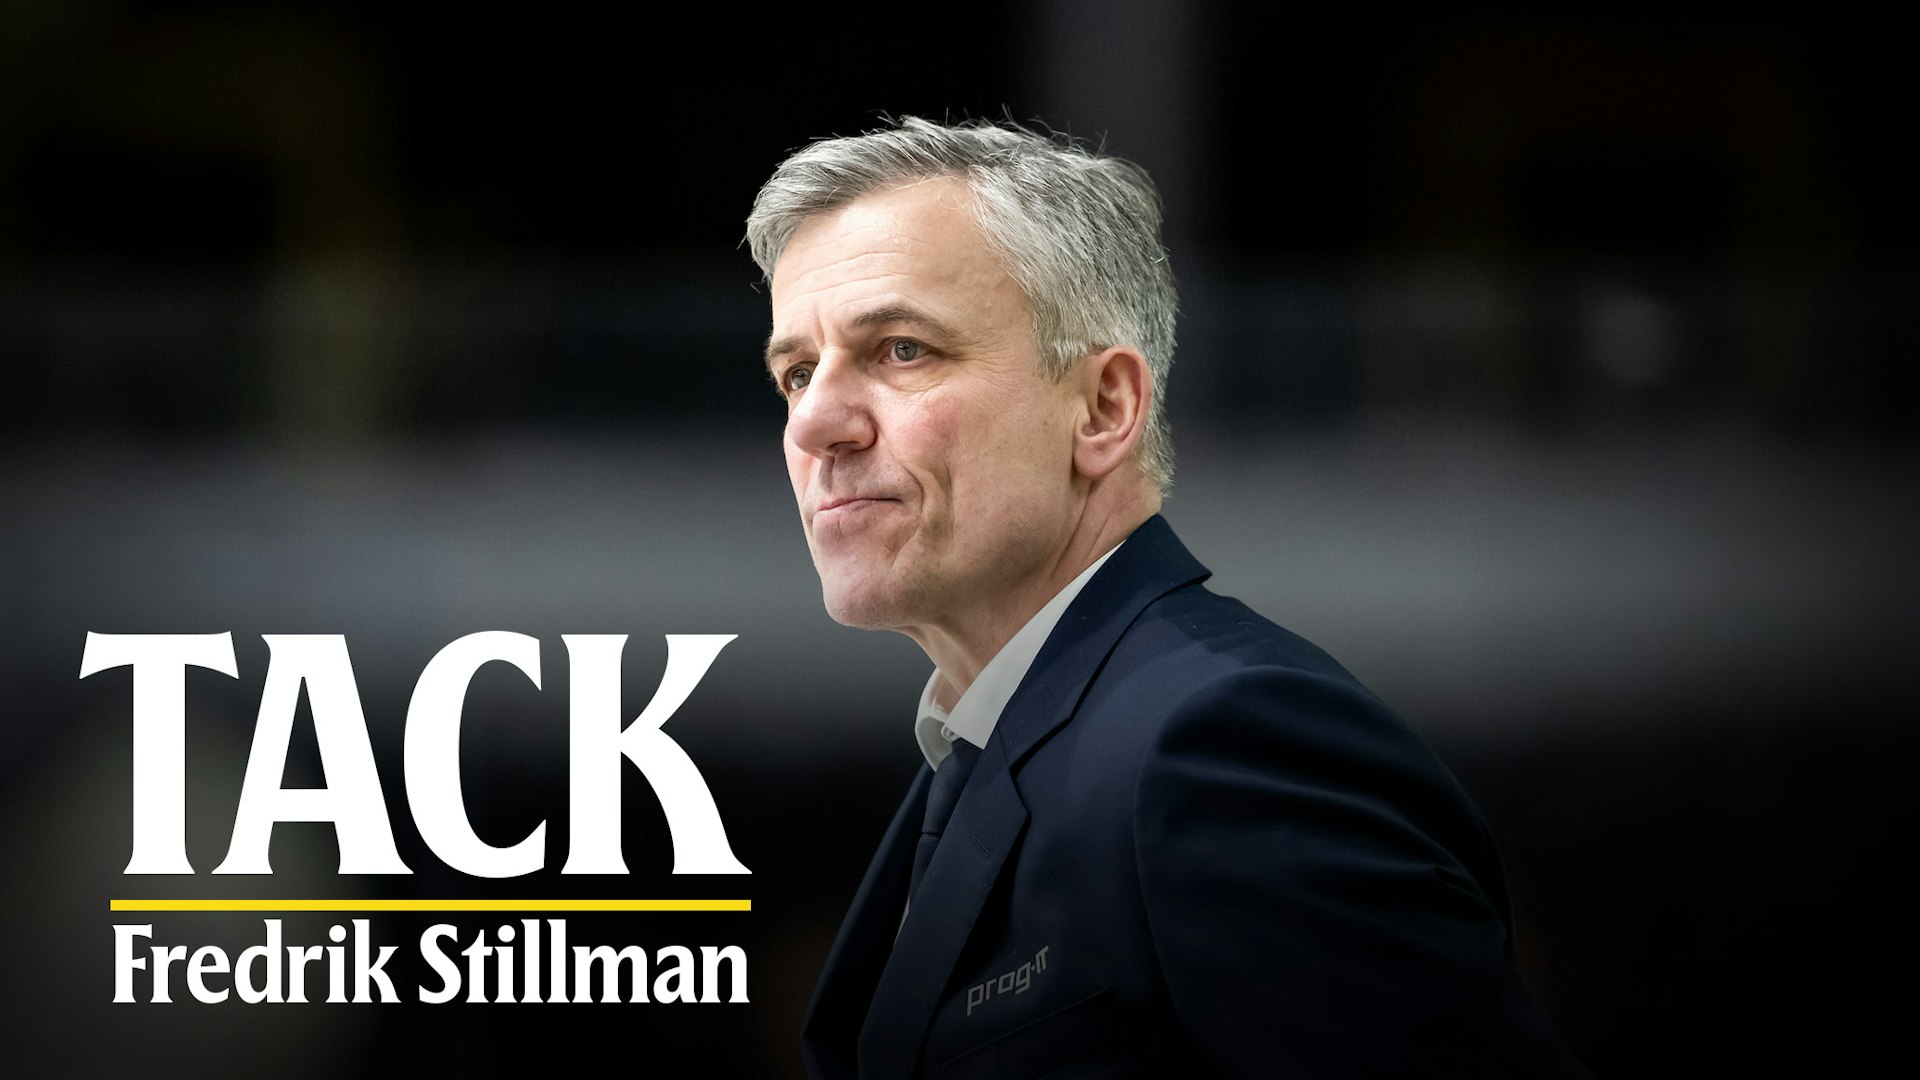 Fredrik Stillman lämnar AIK 